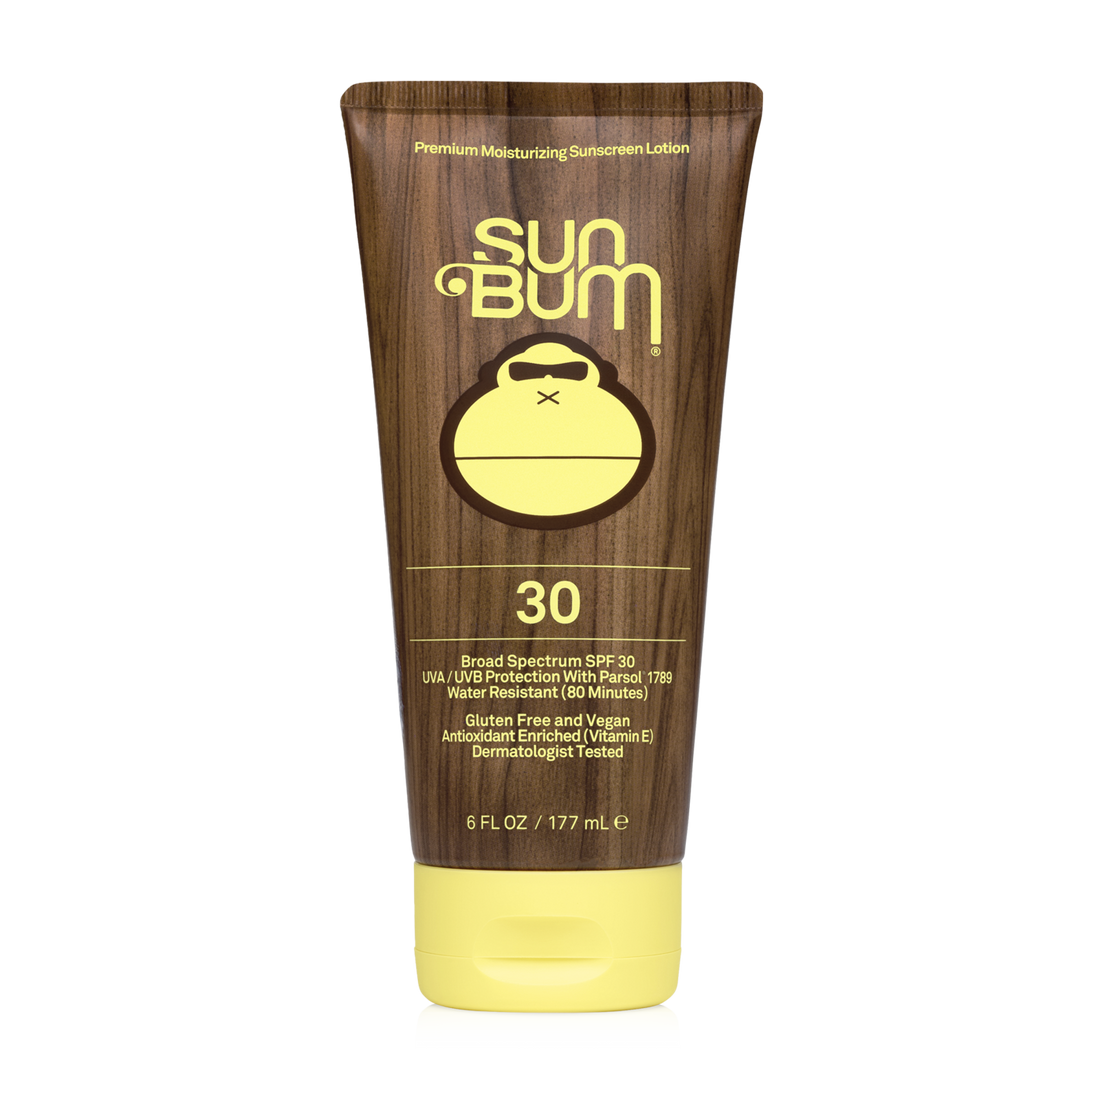 Sun Bum Original SPF 30 Sunscreen 6oz